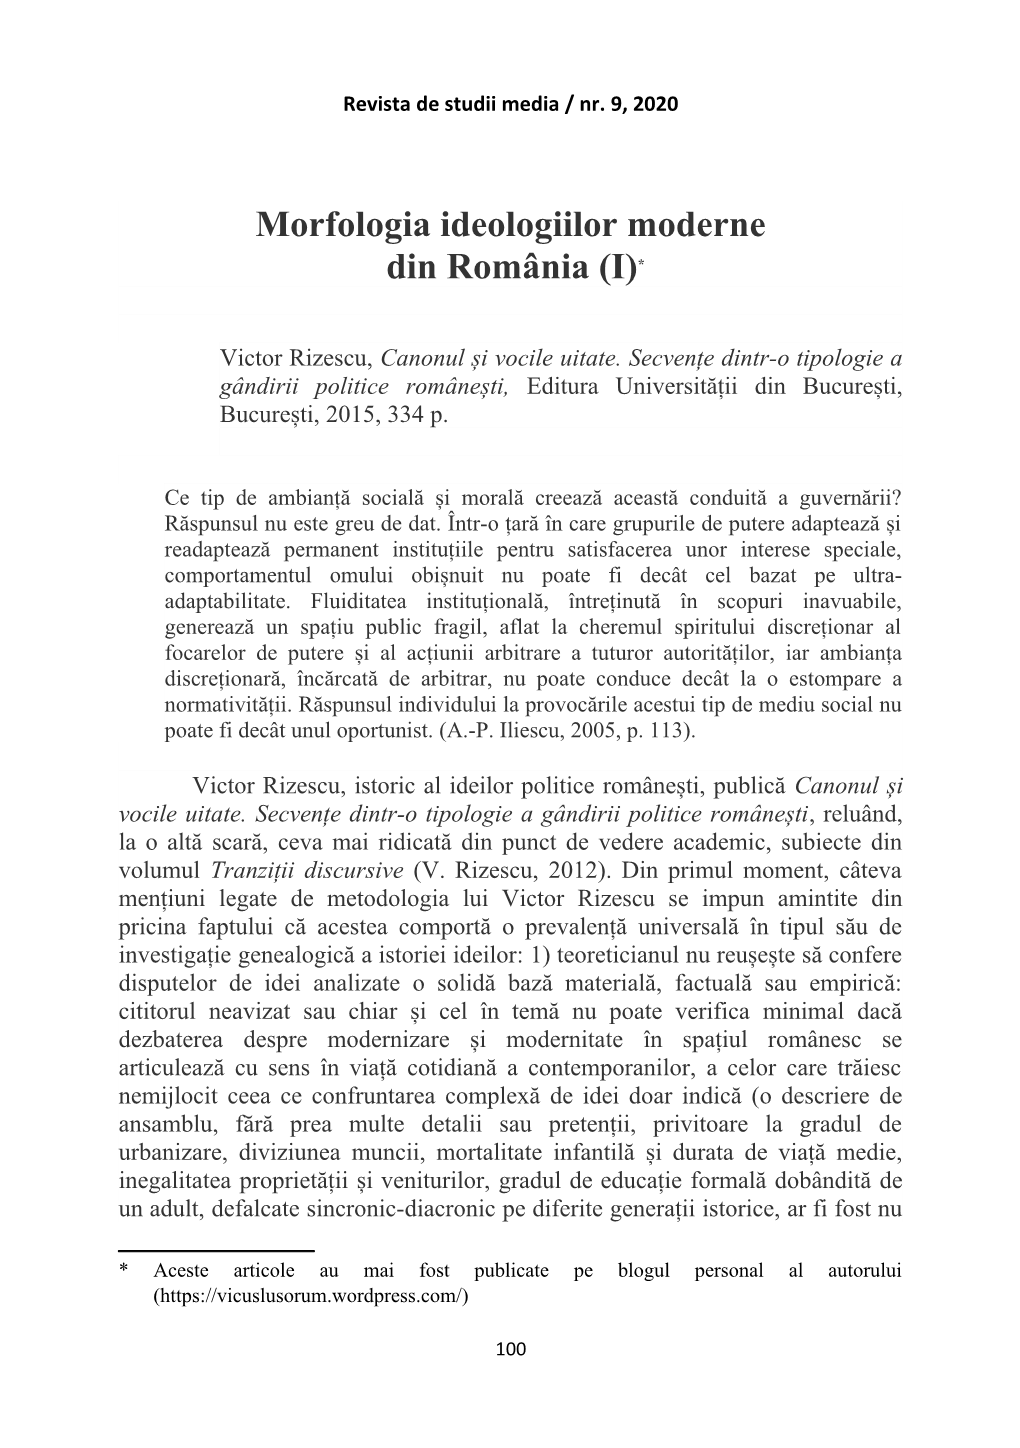 Morfologia Ideologiilor Moderne Din România (I)*